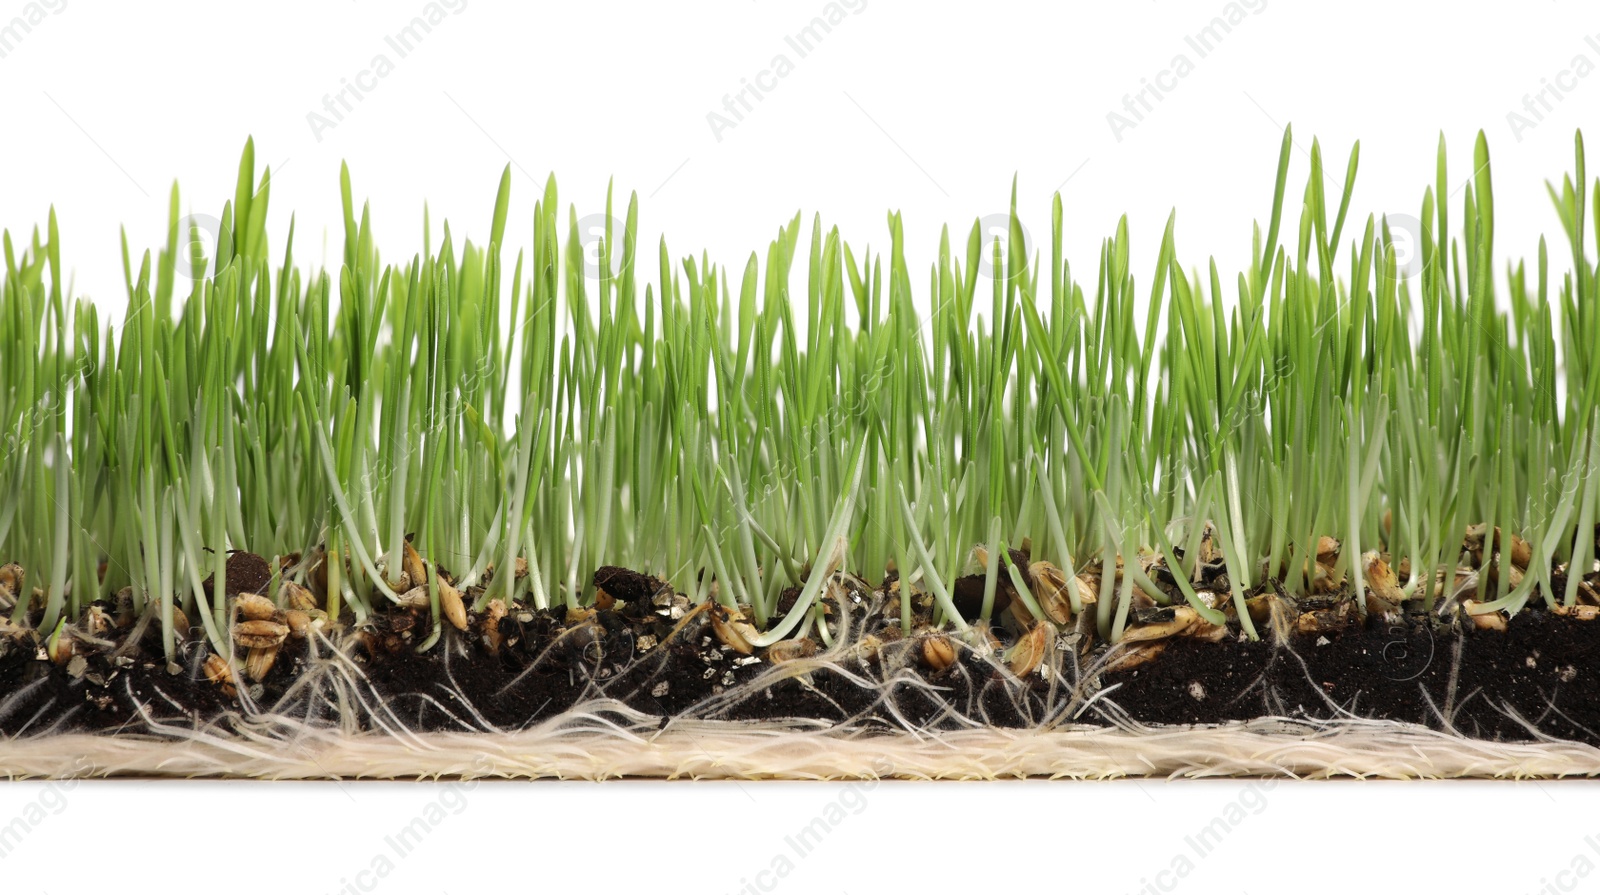 Photo of Soil with lush green wheatgrass on white background